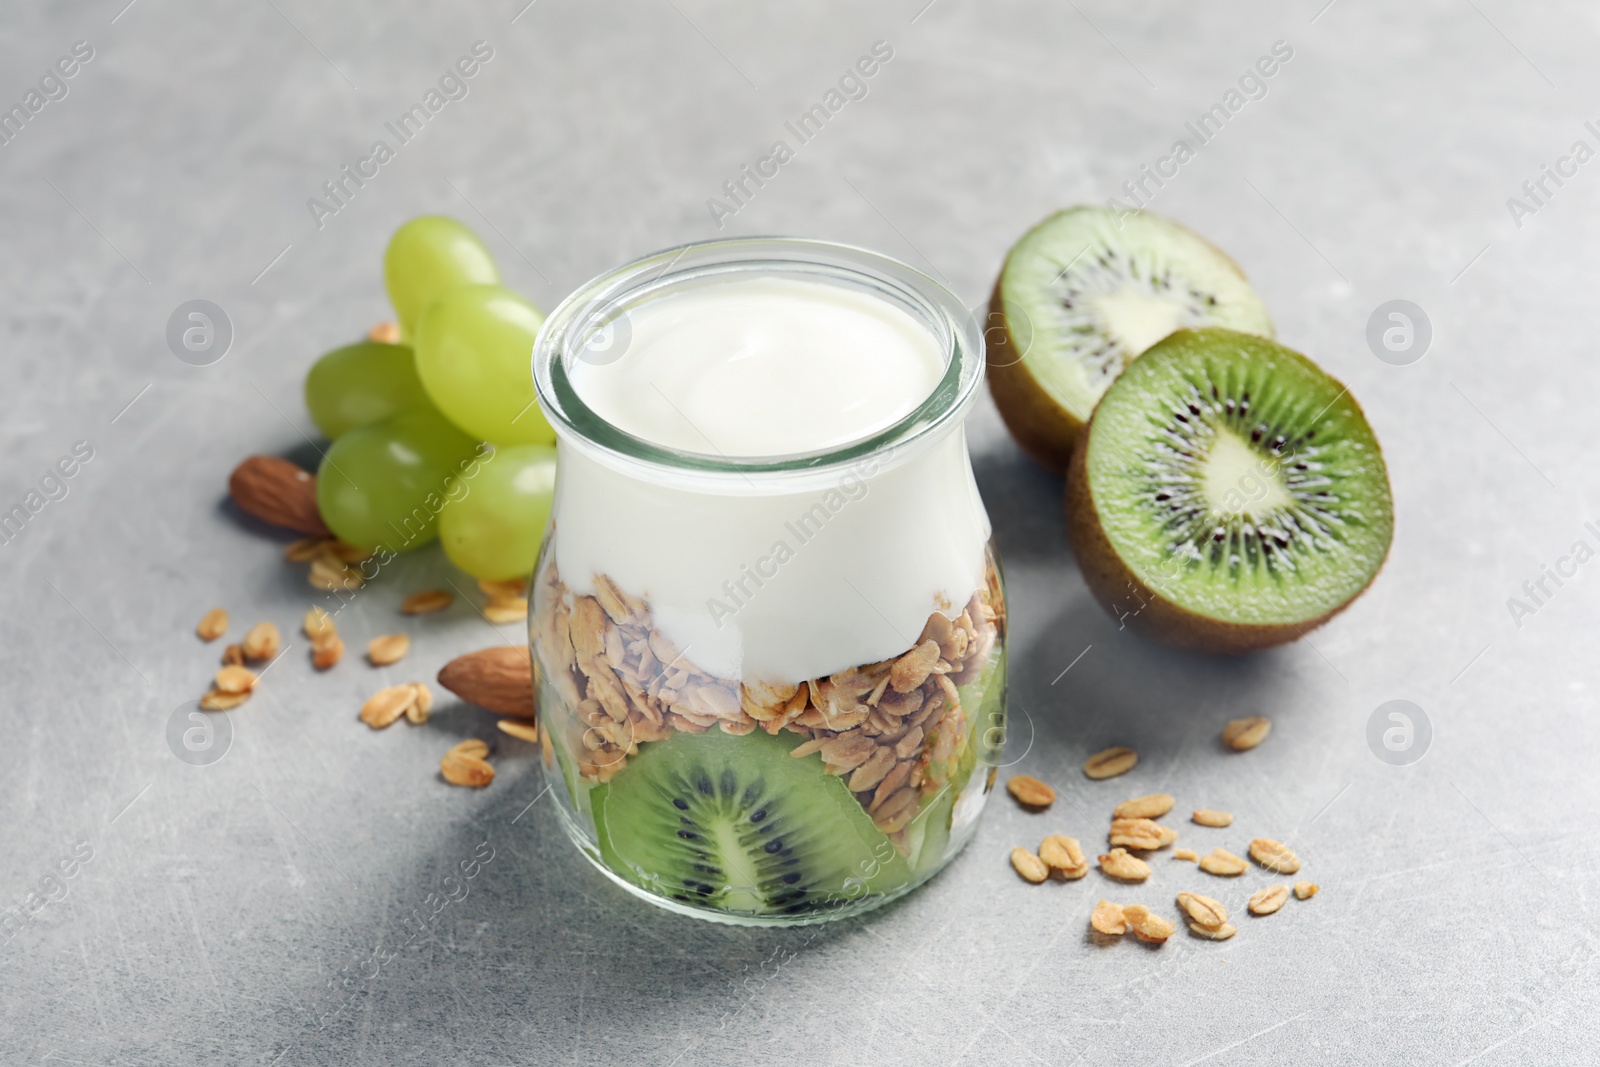 Photo of Jar with yogurt, granola and fruits on table